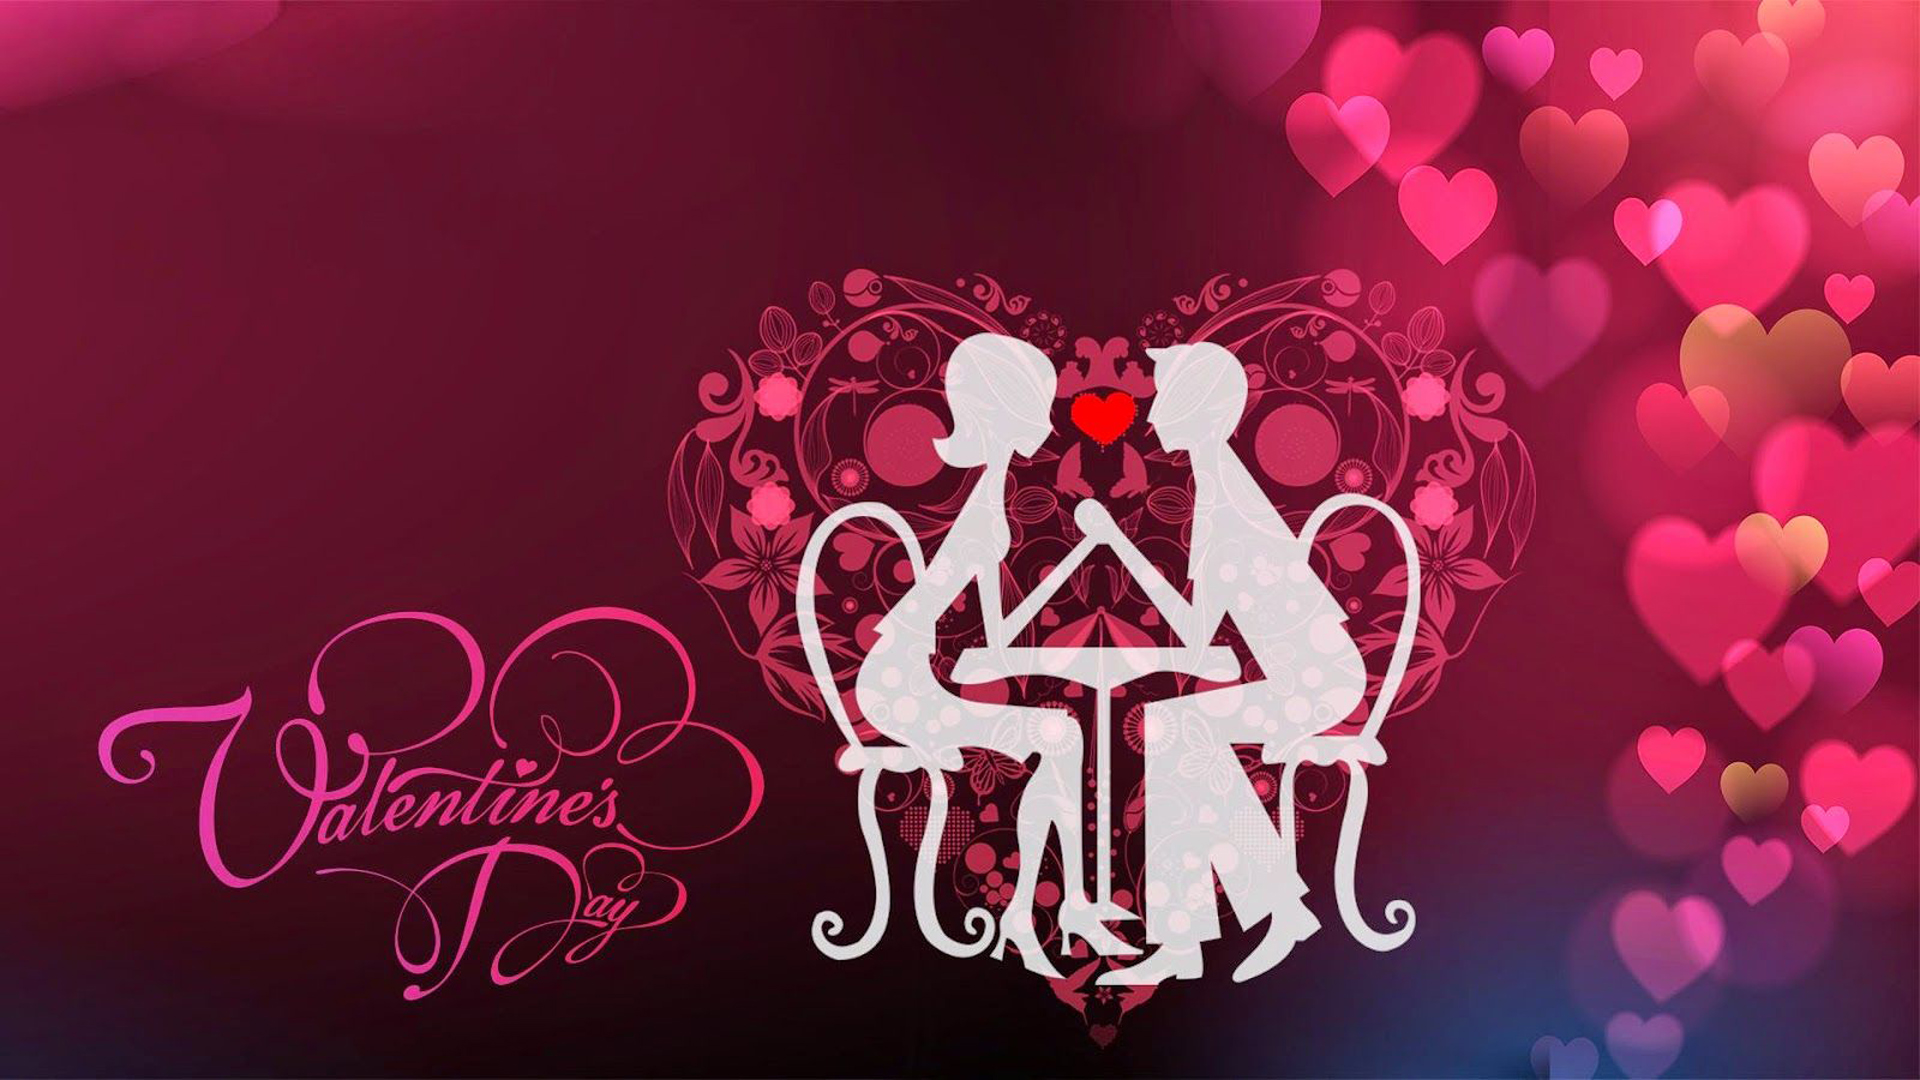 Happy-Valentines-Day-meeting-loving-loving-couple-hearts-graphics-Wallpaper-HD-1920x1080.jpg